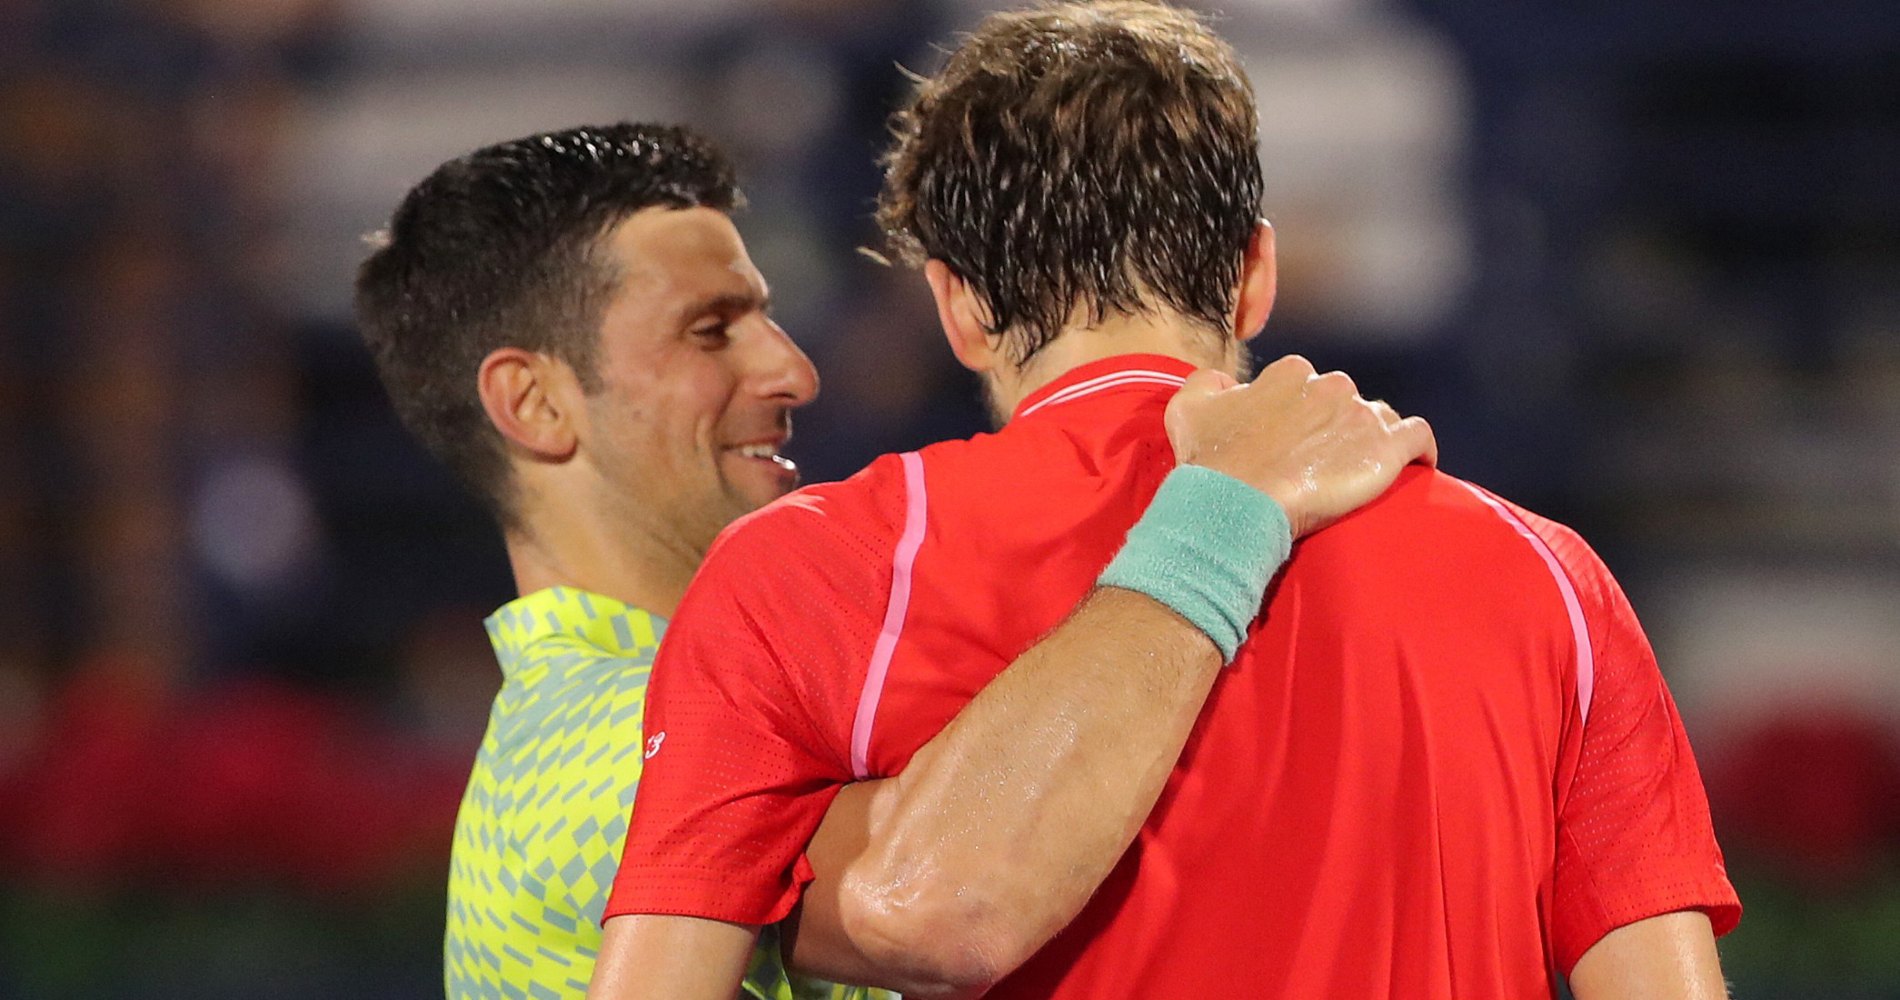 Medvedev ends Djokovic win streak to enter Dubai final, dubai open final 